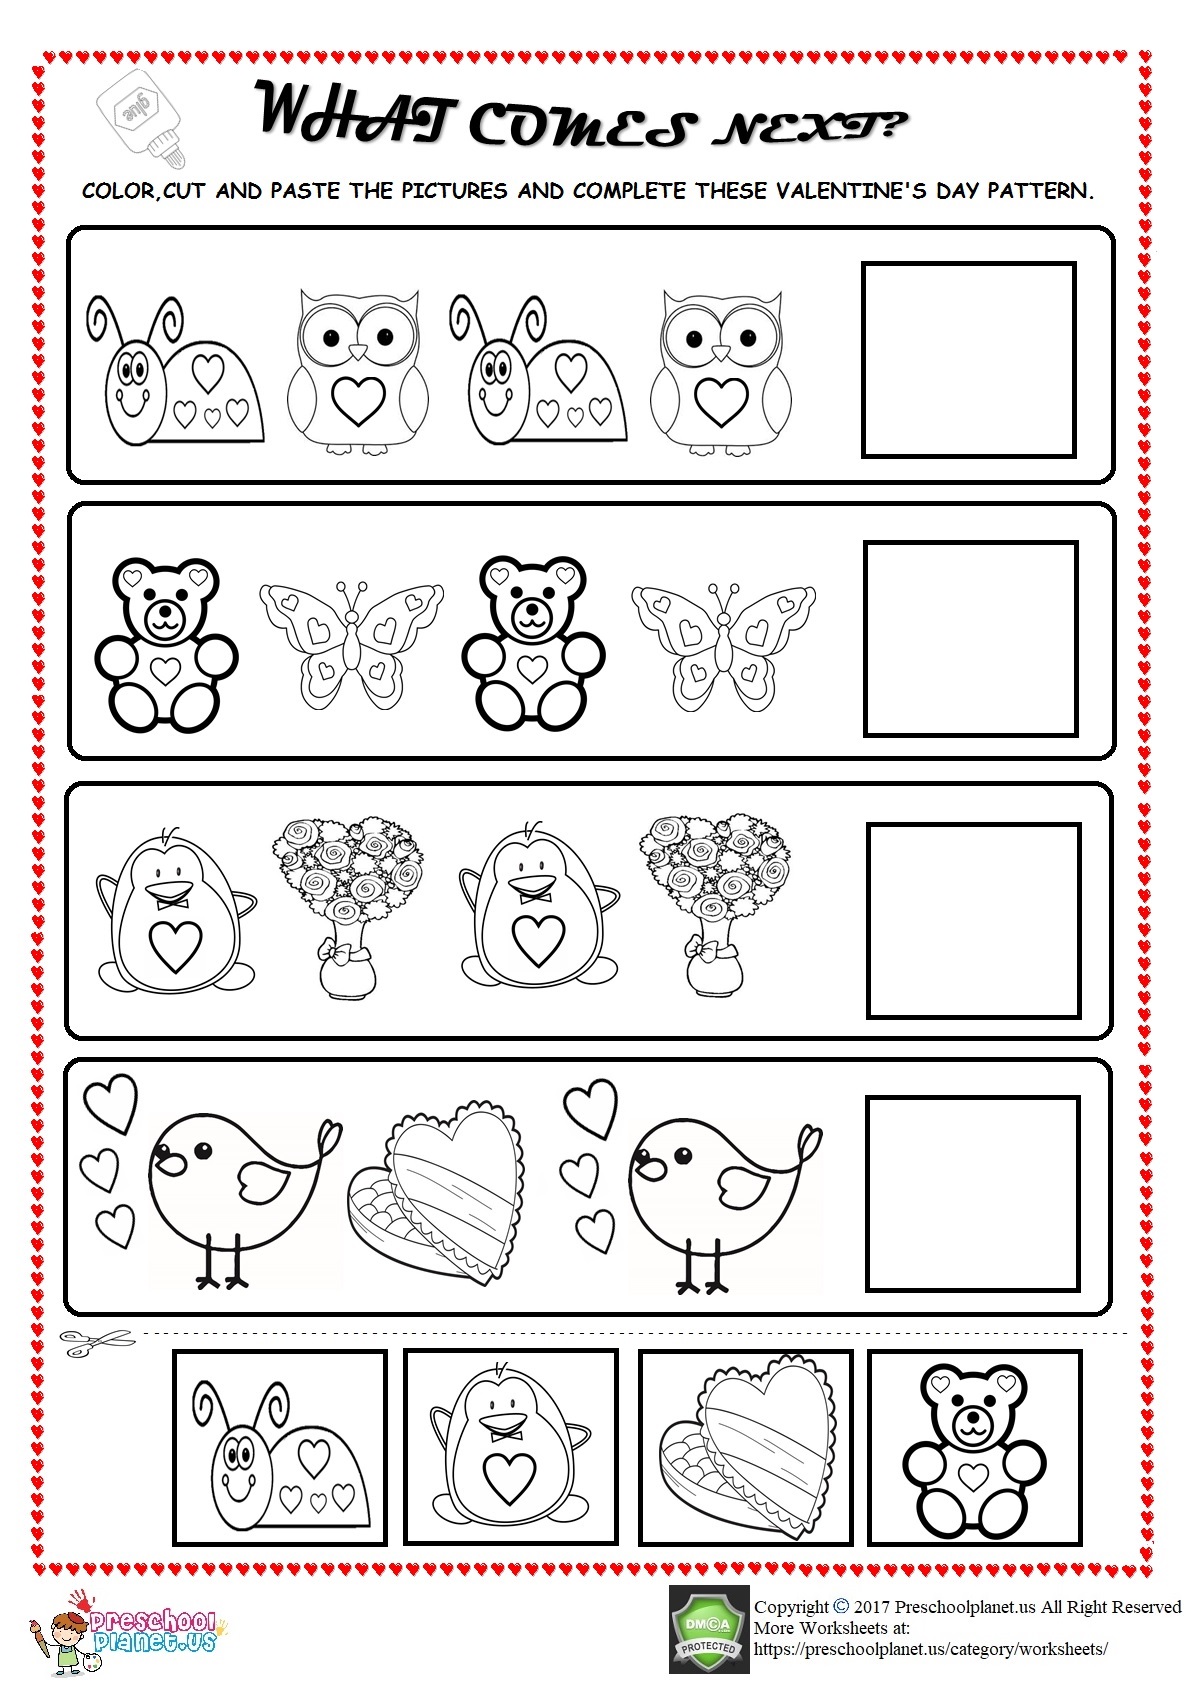 valentine's day pattern worksheet for kids